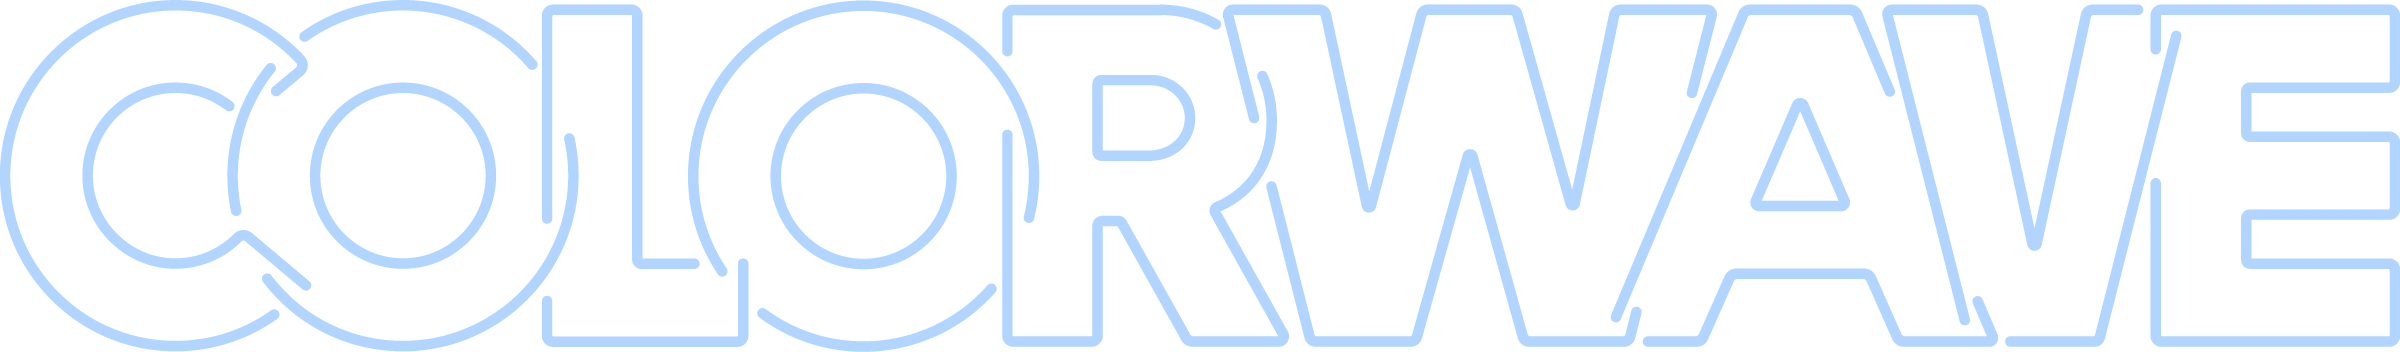 Colorwave logo